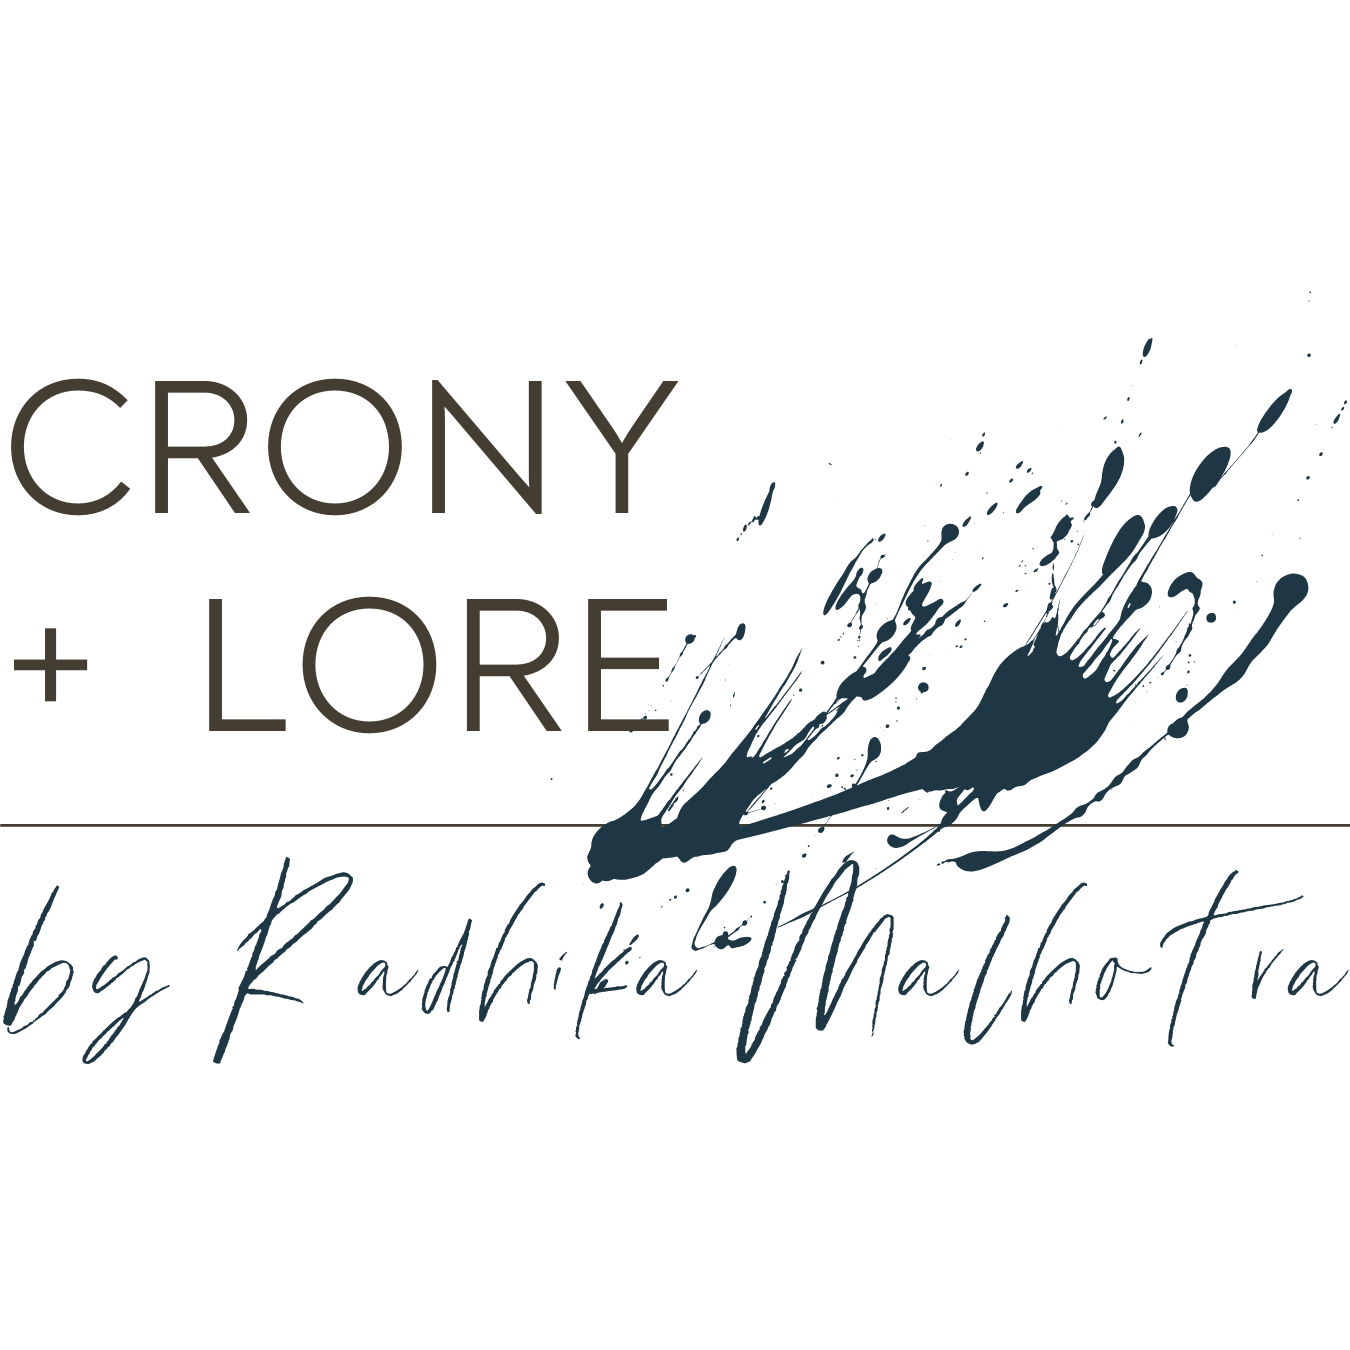 Crony + Lore by Radhika Malhotra